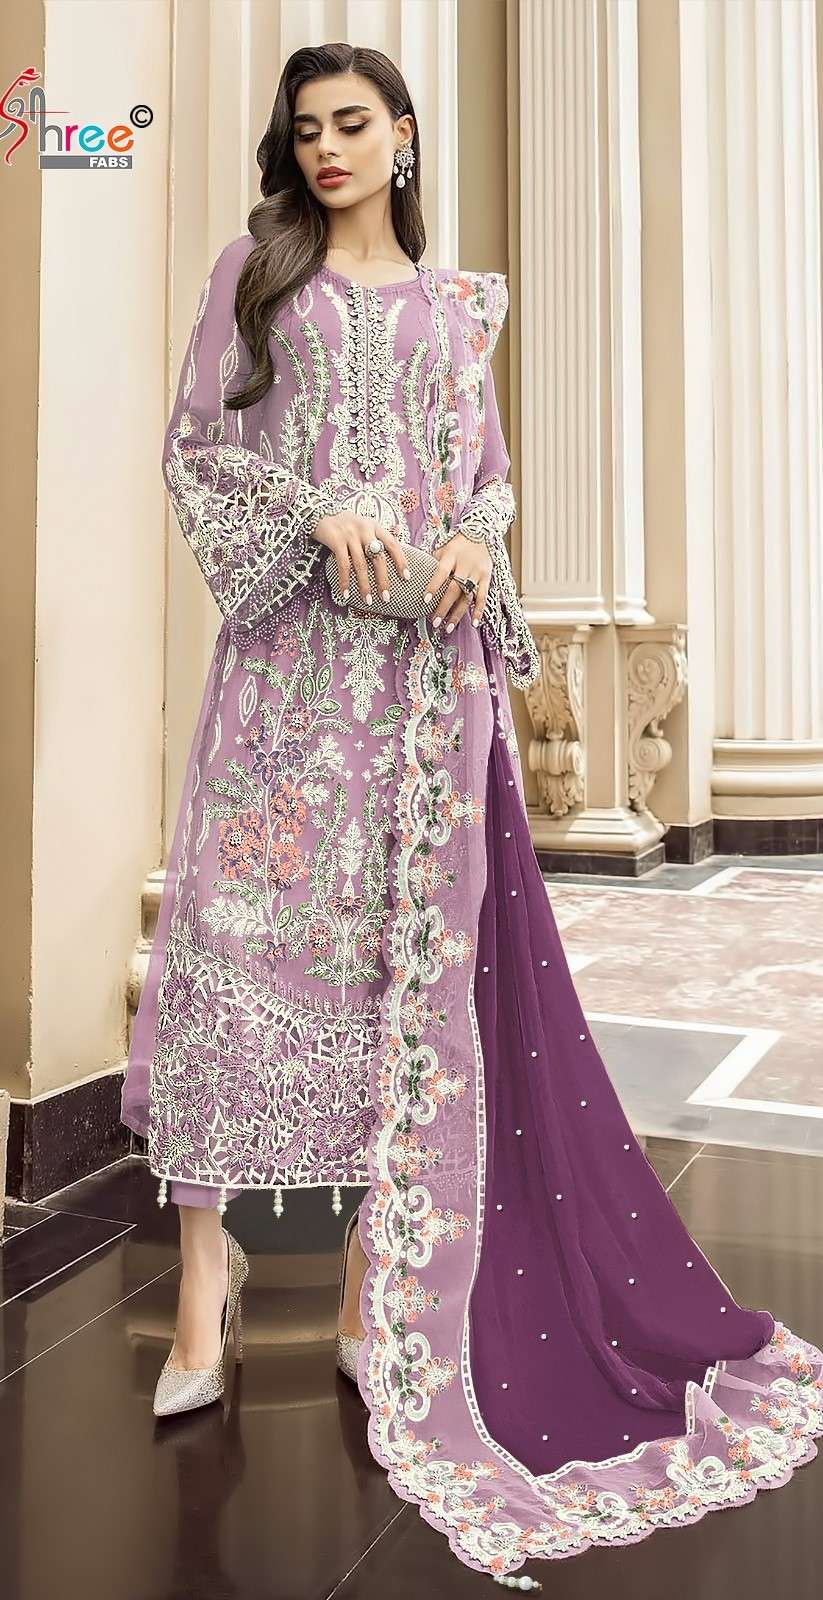 shree fabs 1910 colours exclusive designer pakistani salwar suits online best rate surat gujarat